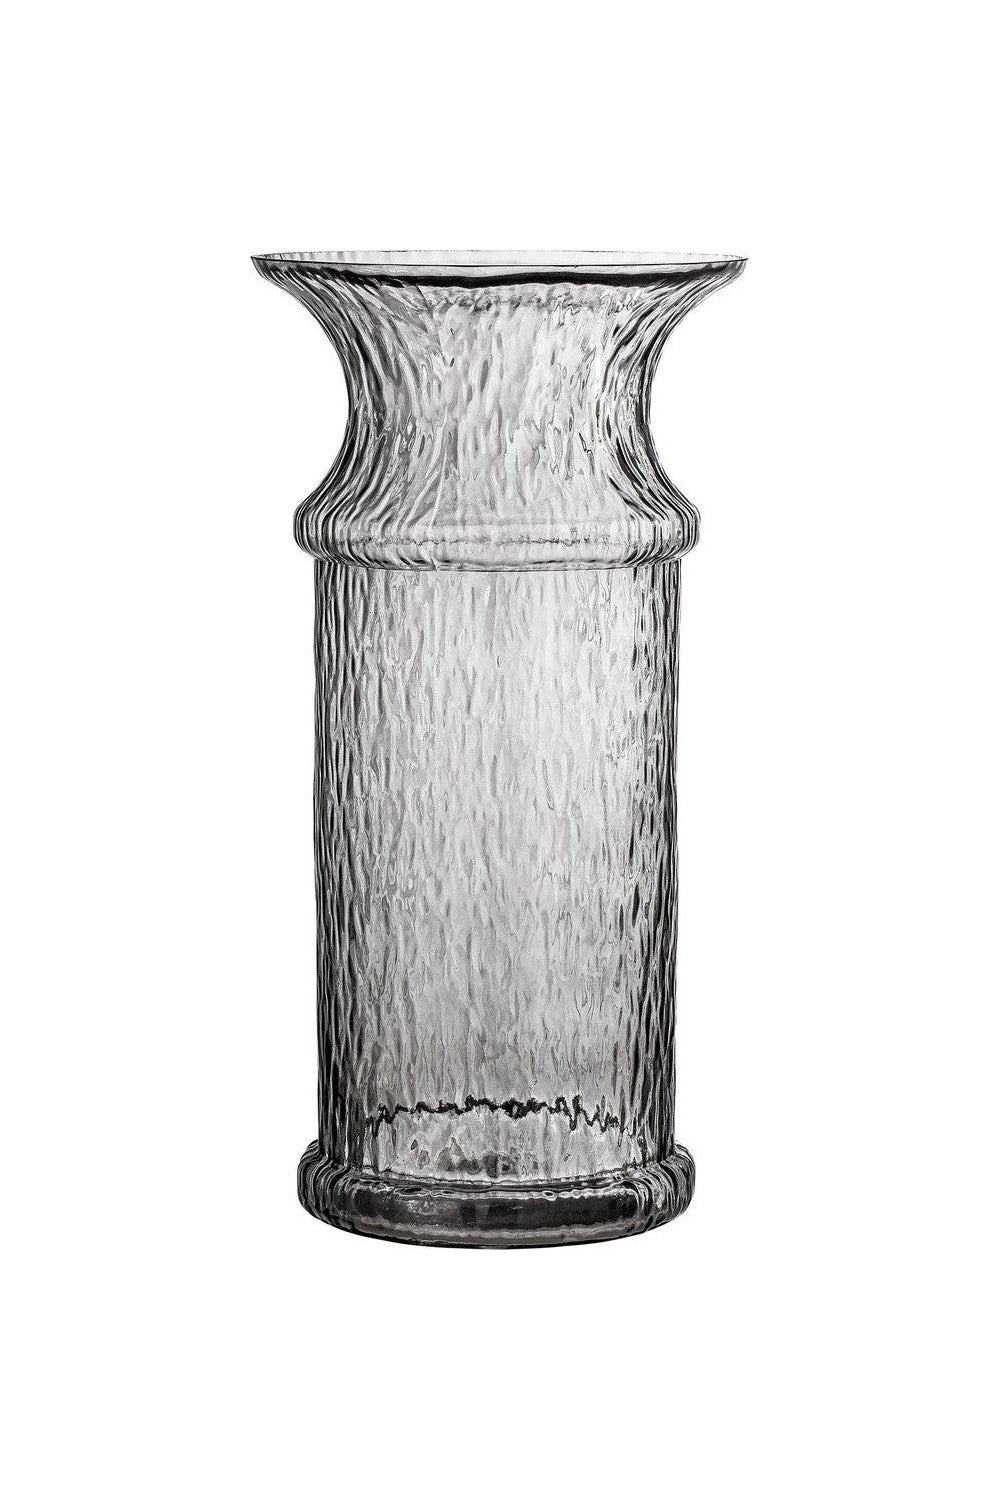 Creative Collection Dida Vase, Grey, Glass